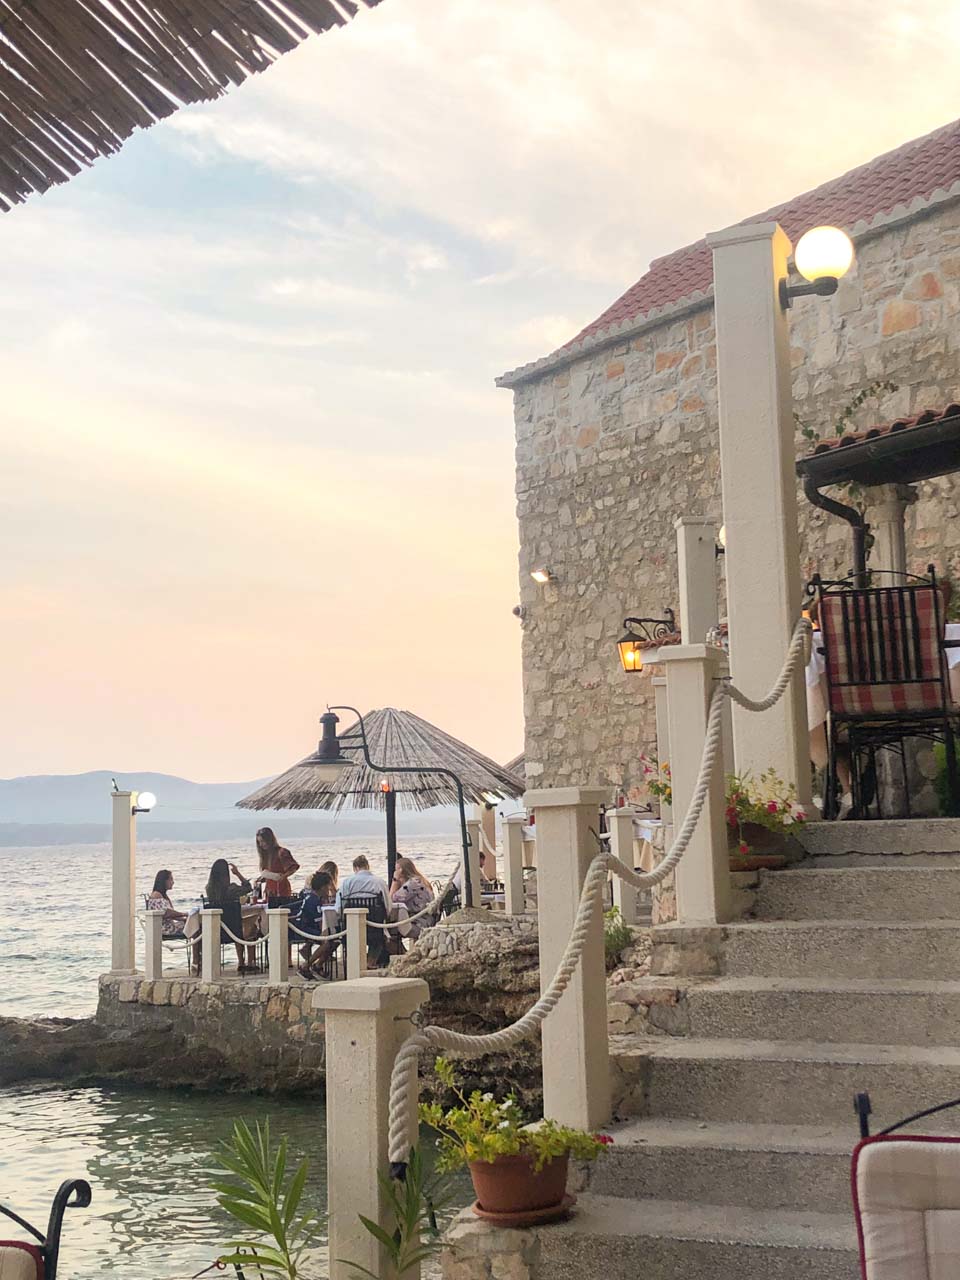 The outdoor terrace of the Ribarska Kućica restaurant in Bol, Croatia